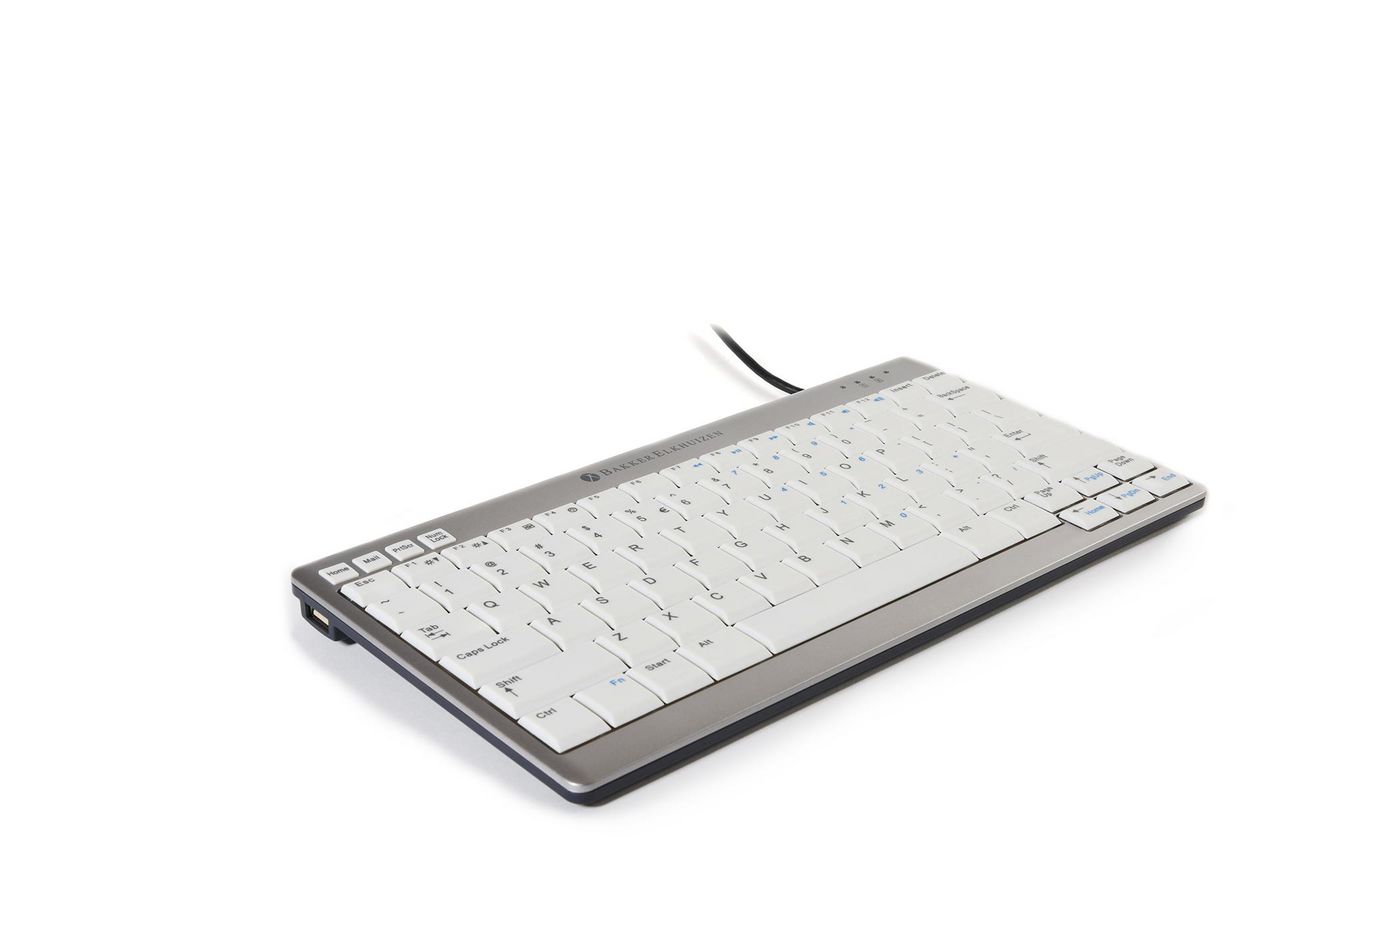 BAKKERELKHUIZEN Bakker Elkhuizen Tastatur Ultraboard 950 Compact US Layout